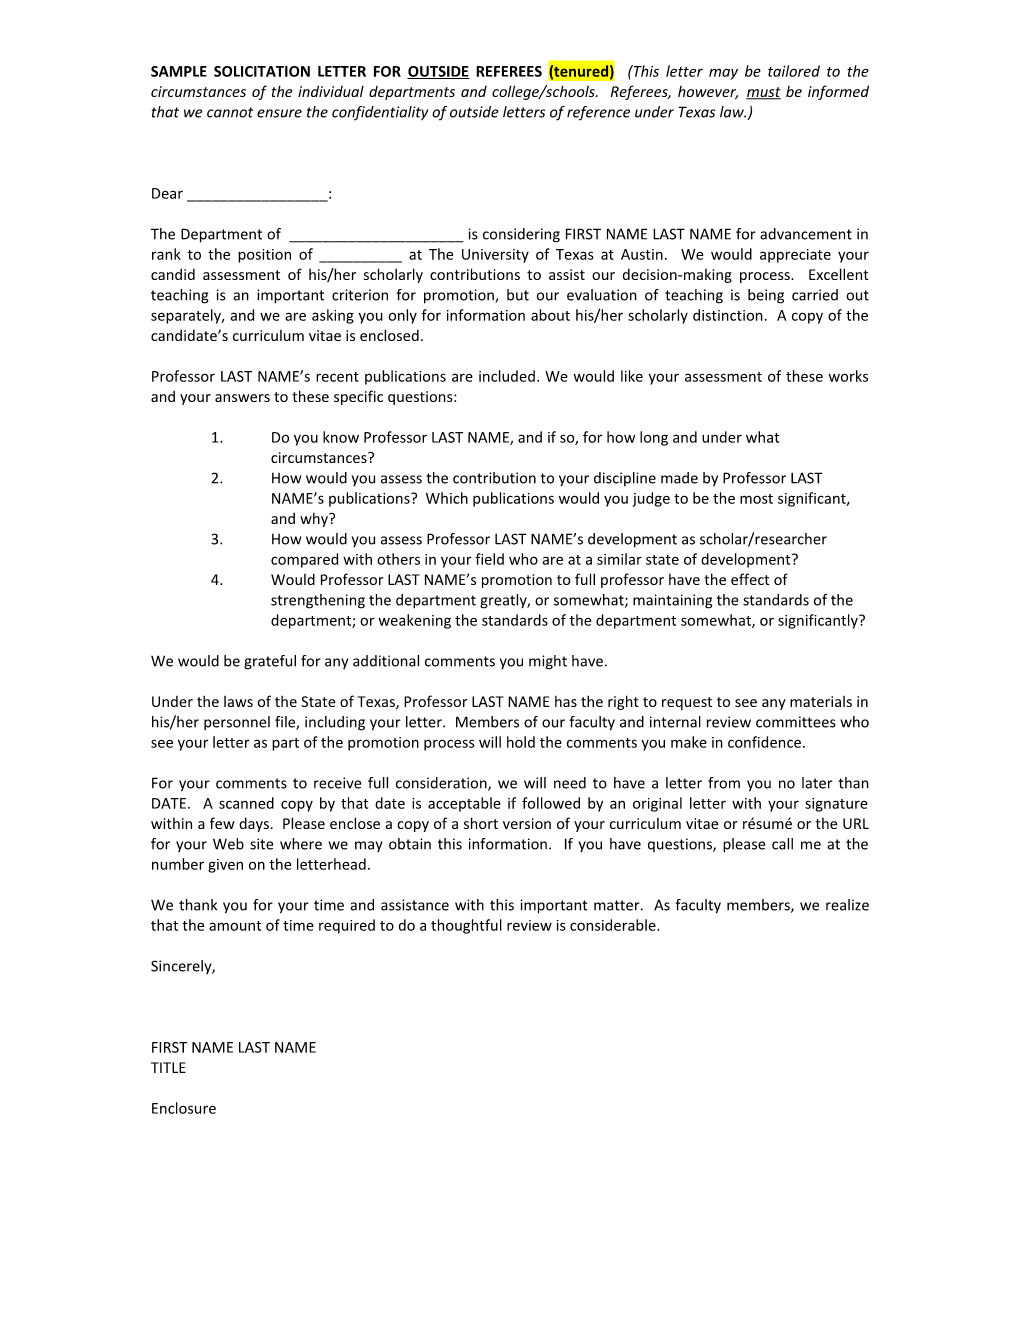 Sample Solicitation Letter for Outside Referees